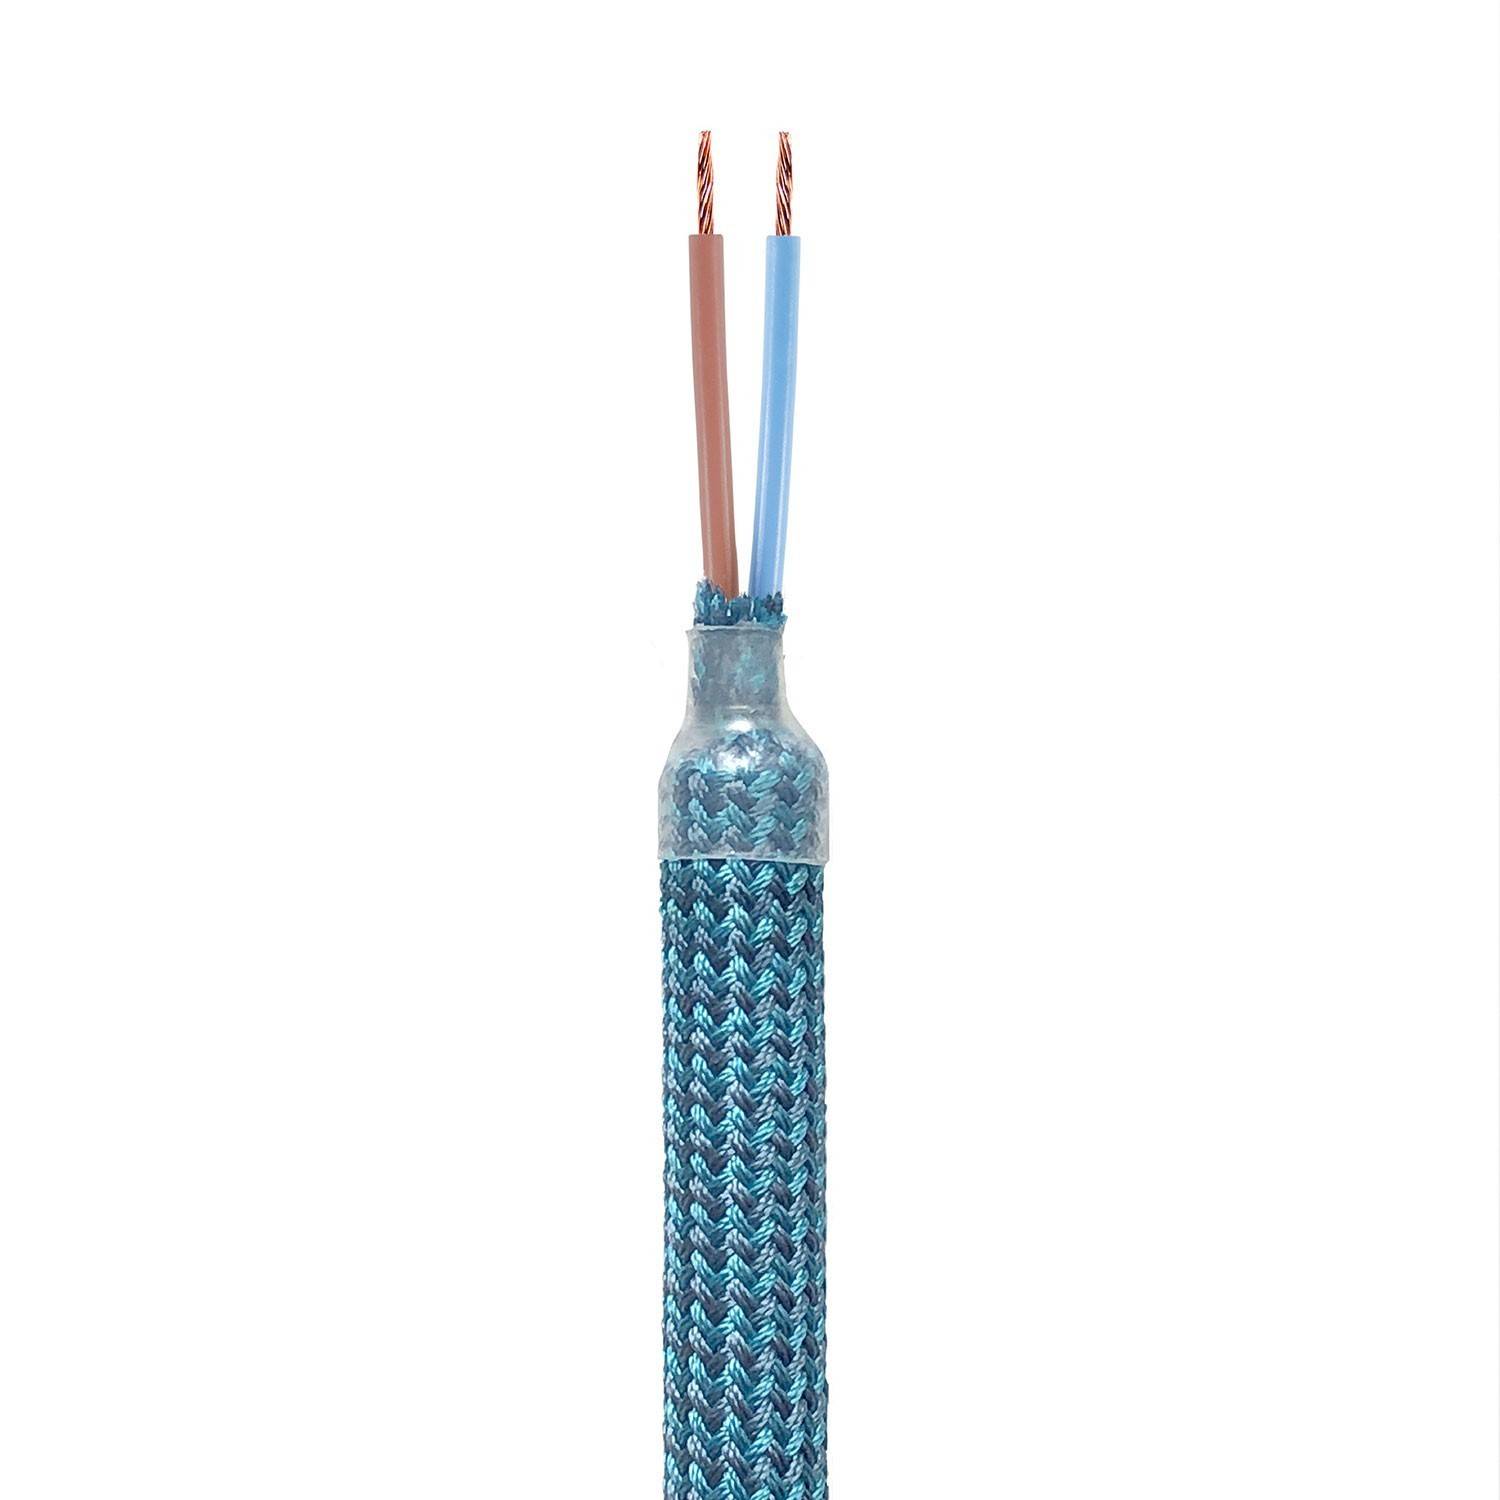 Creative Flex εύκαμπτος σωλήνας καλυμμένος με ύφασμα Μπλε Πετρόλ RM78, kit με μεταλλικά τερματικά